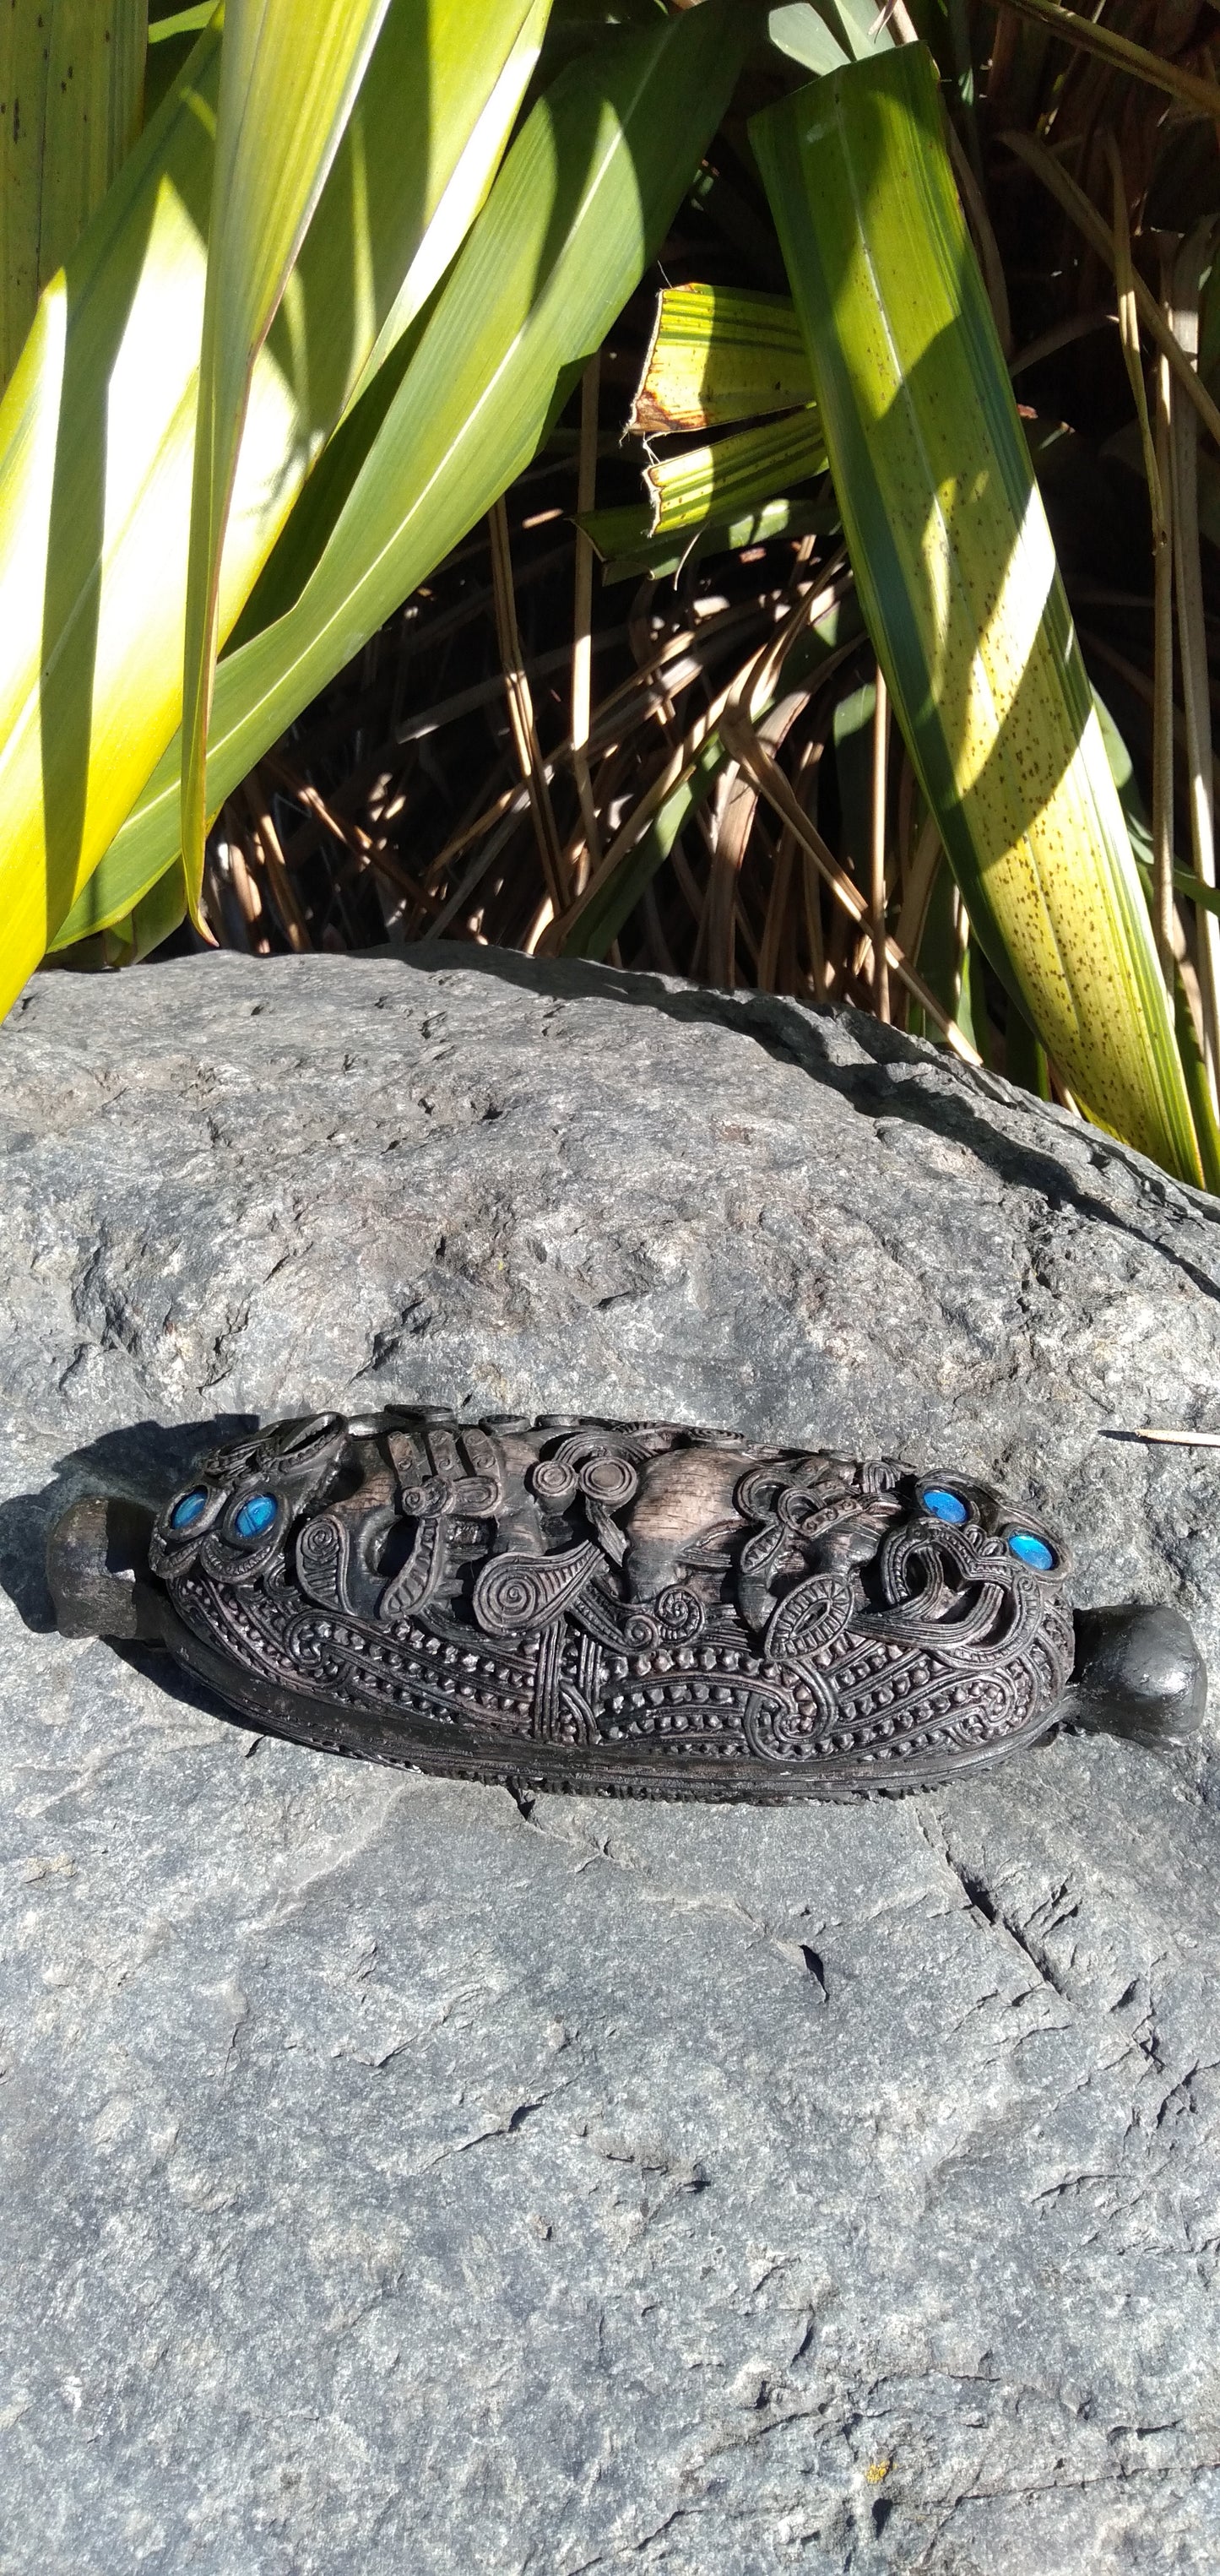 Wakahuia, Feather box, Treasure box from Pacific Jewel - Southern Paua New Zealand